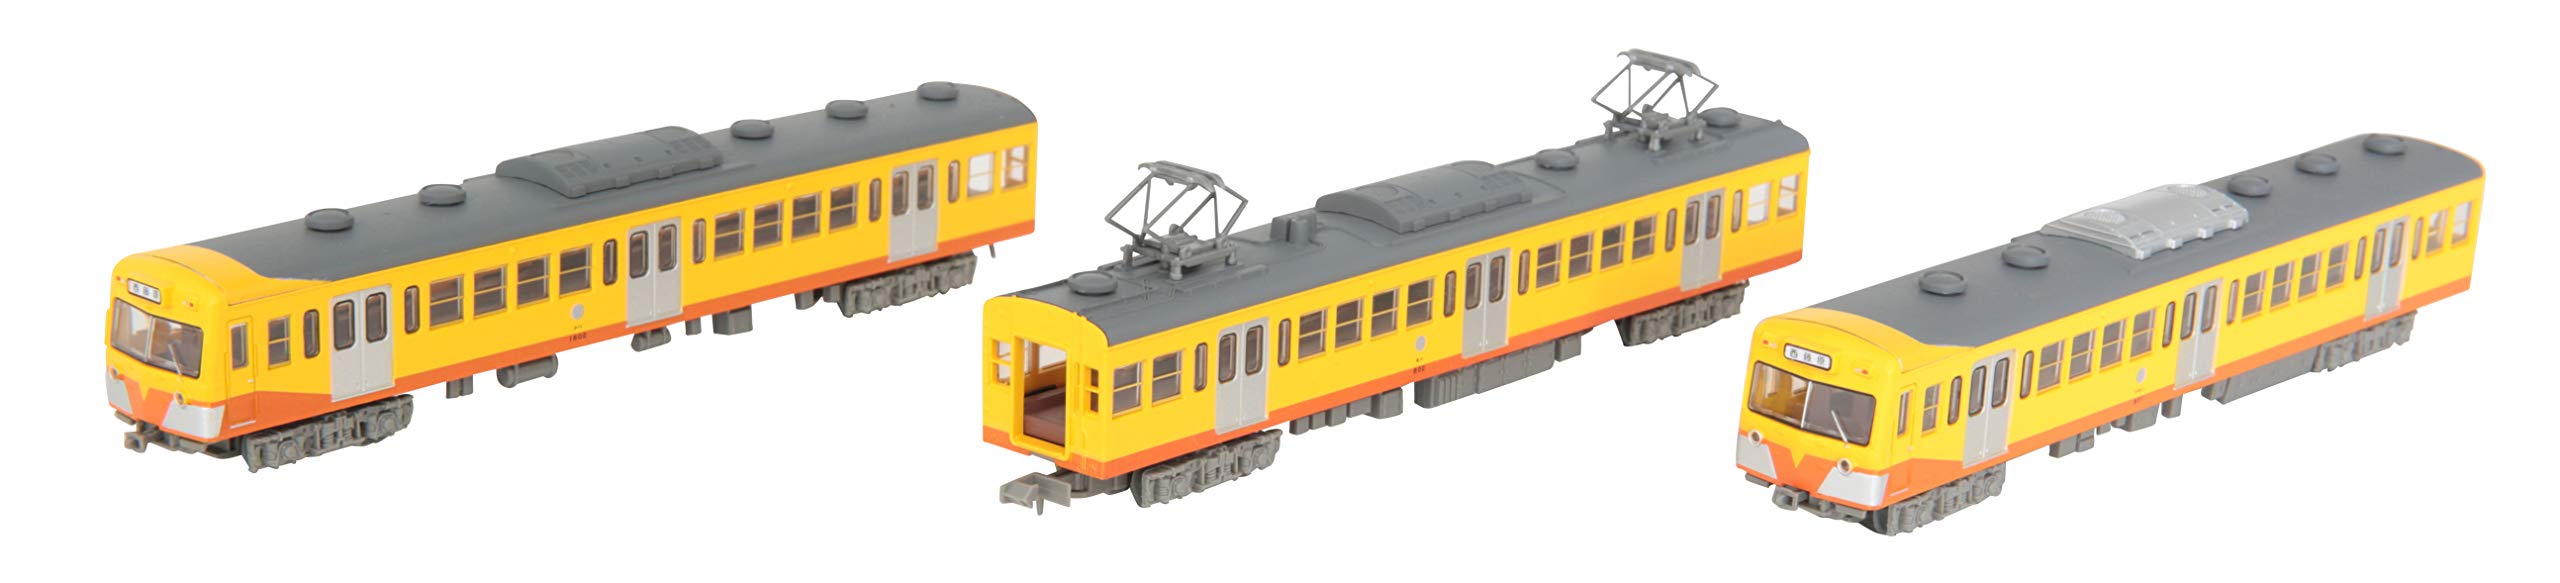 Tomytec 801 Series 3-Car Set Sangi Railway Collection Limited Production Orange Line - 300649